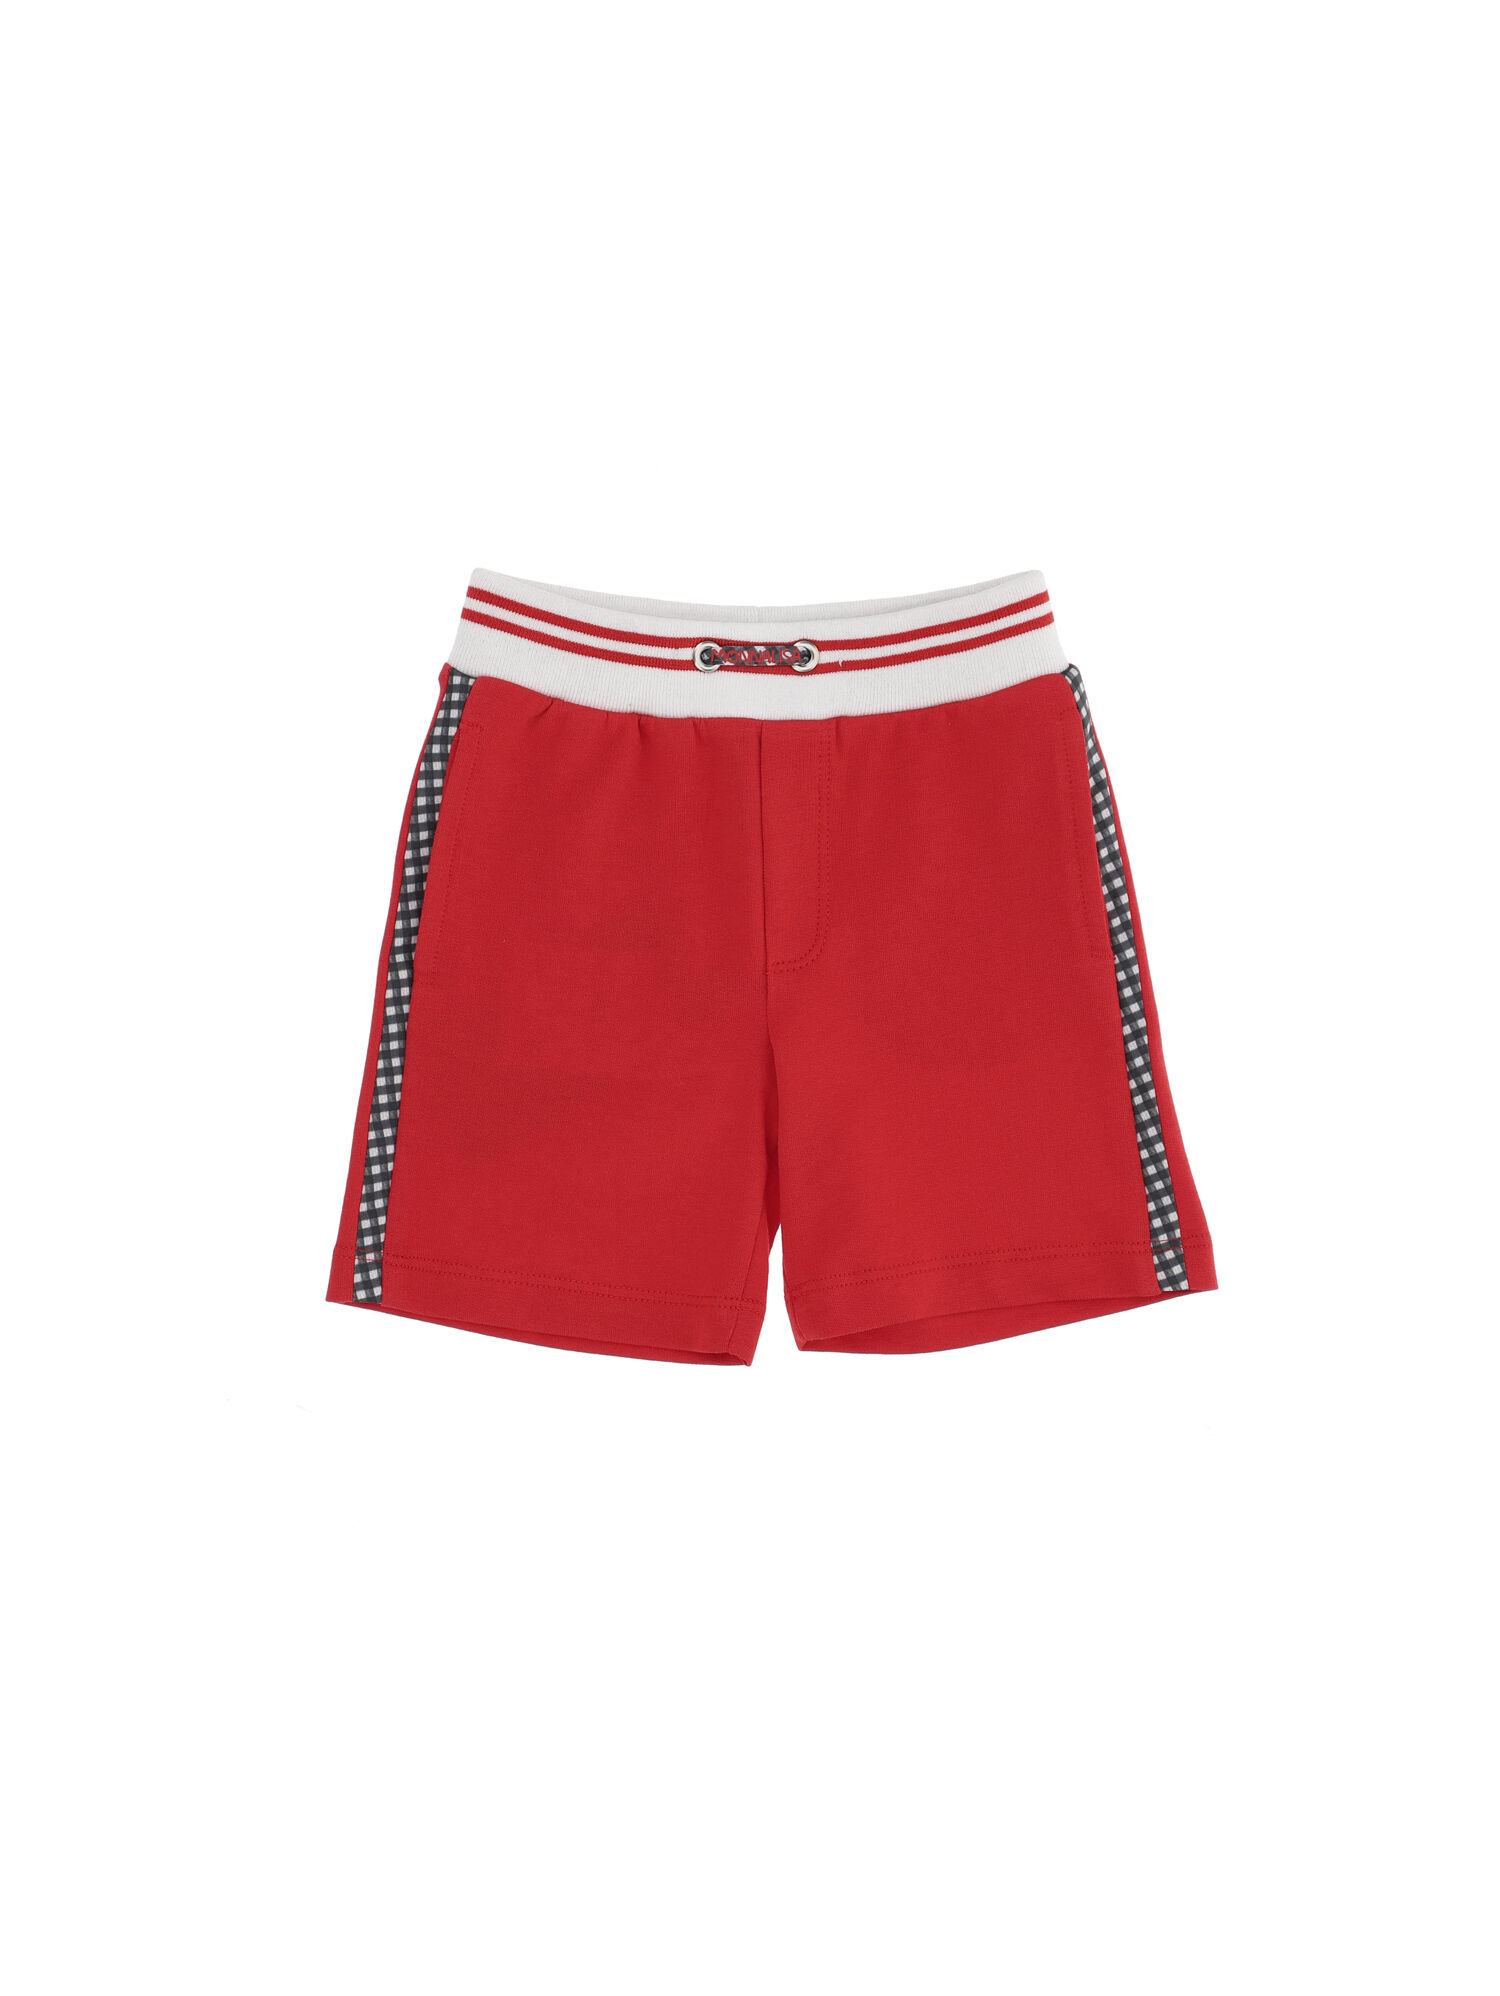 Gingham fleece Bermuda shorts Monnalisa Boys Clothing Shorts Bermudas 